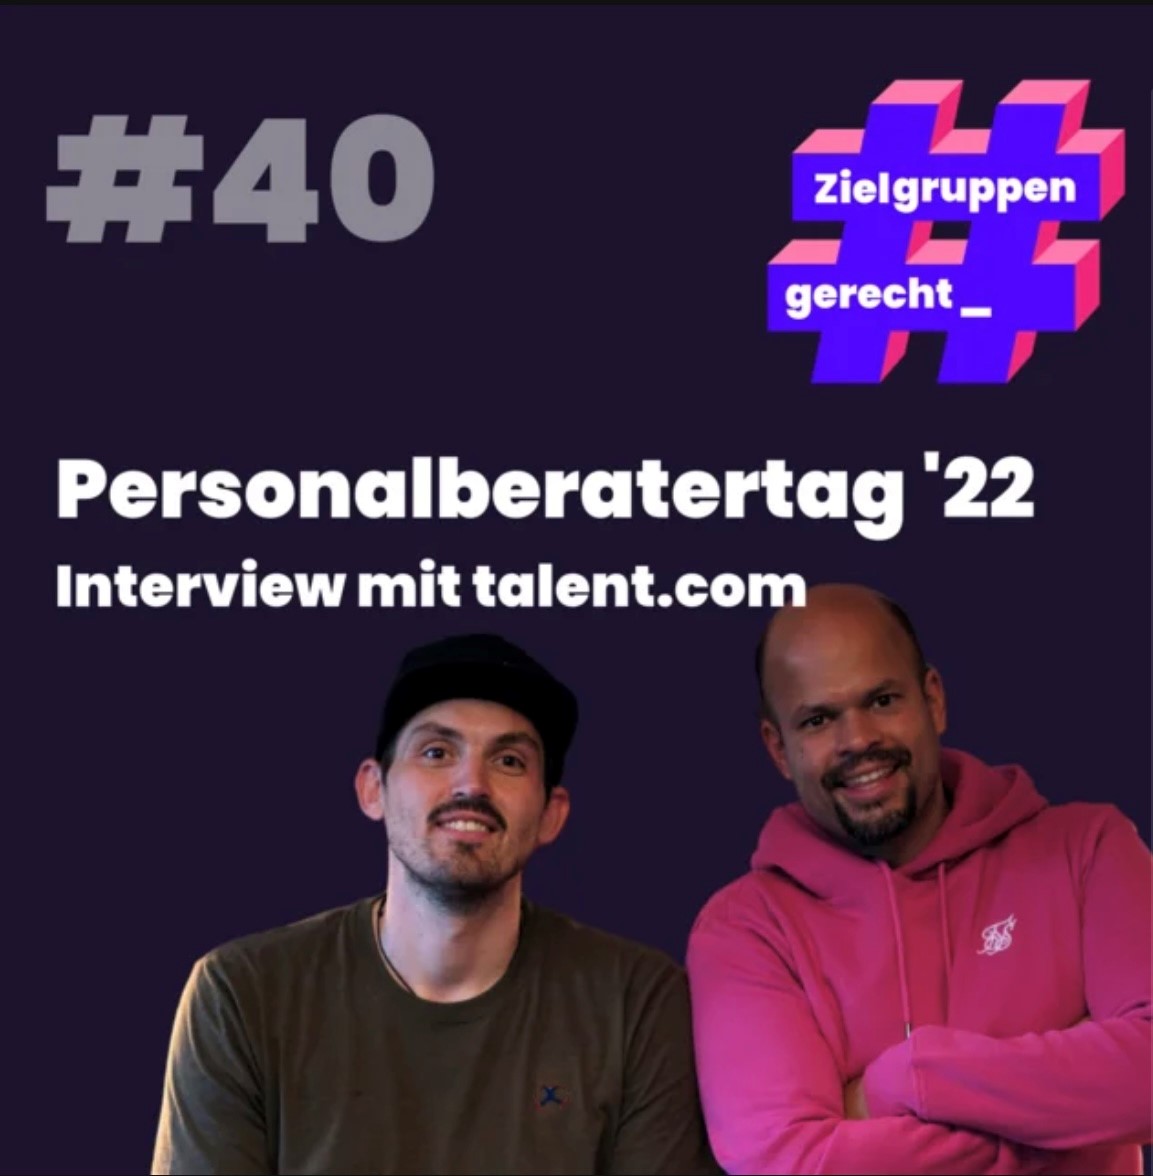 Interview mit Talent.com zum Personalberatertag 2022